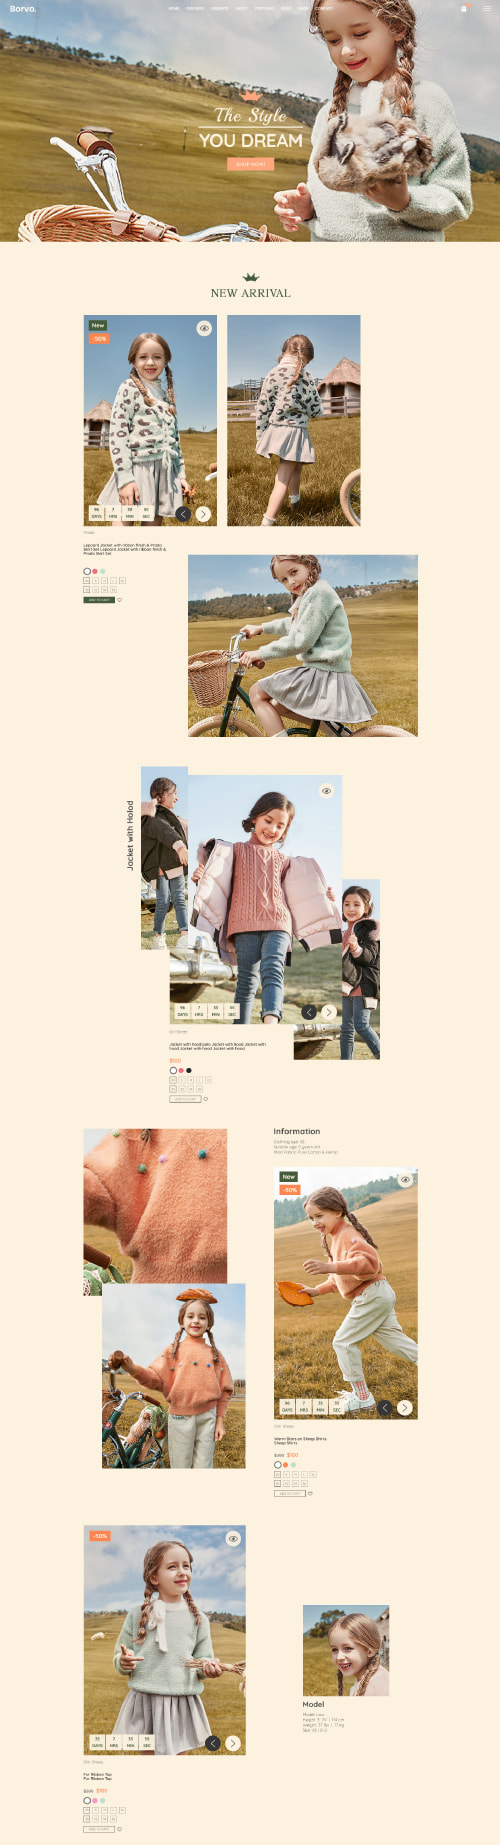 The JPcreative_Landing Page Design_Kid Clothing